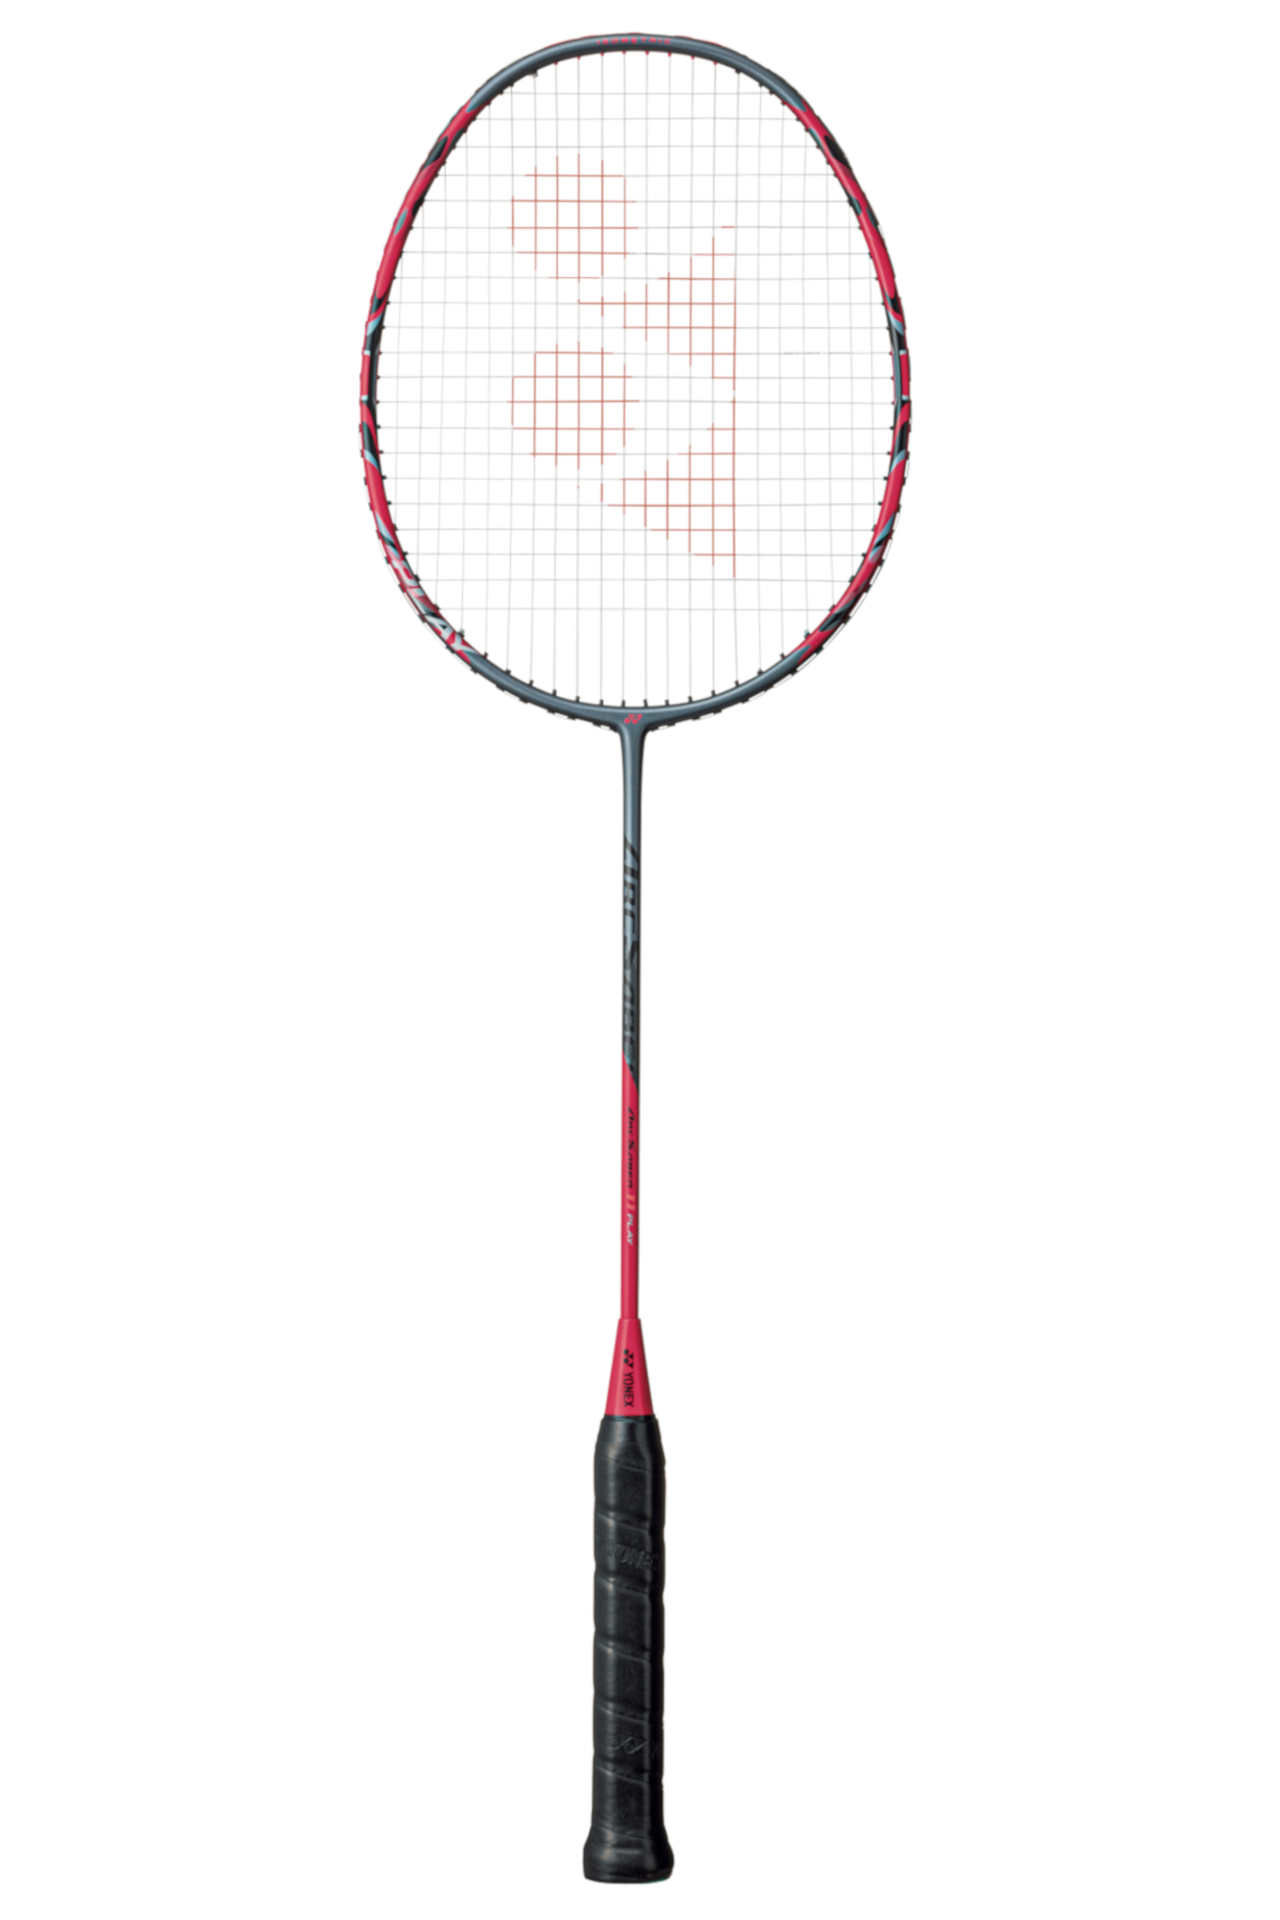 Arcsaber 11 Play (83g / 4uG5) Badminton Raketi - İnci Gri | Yonex